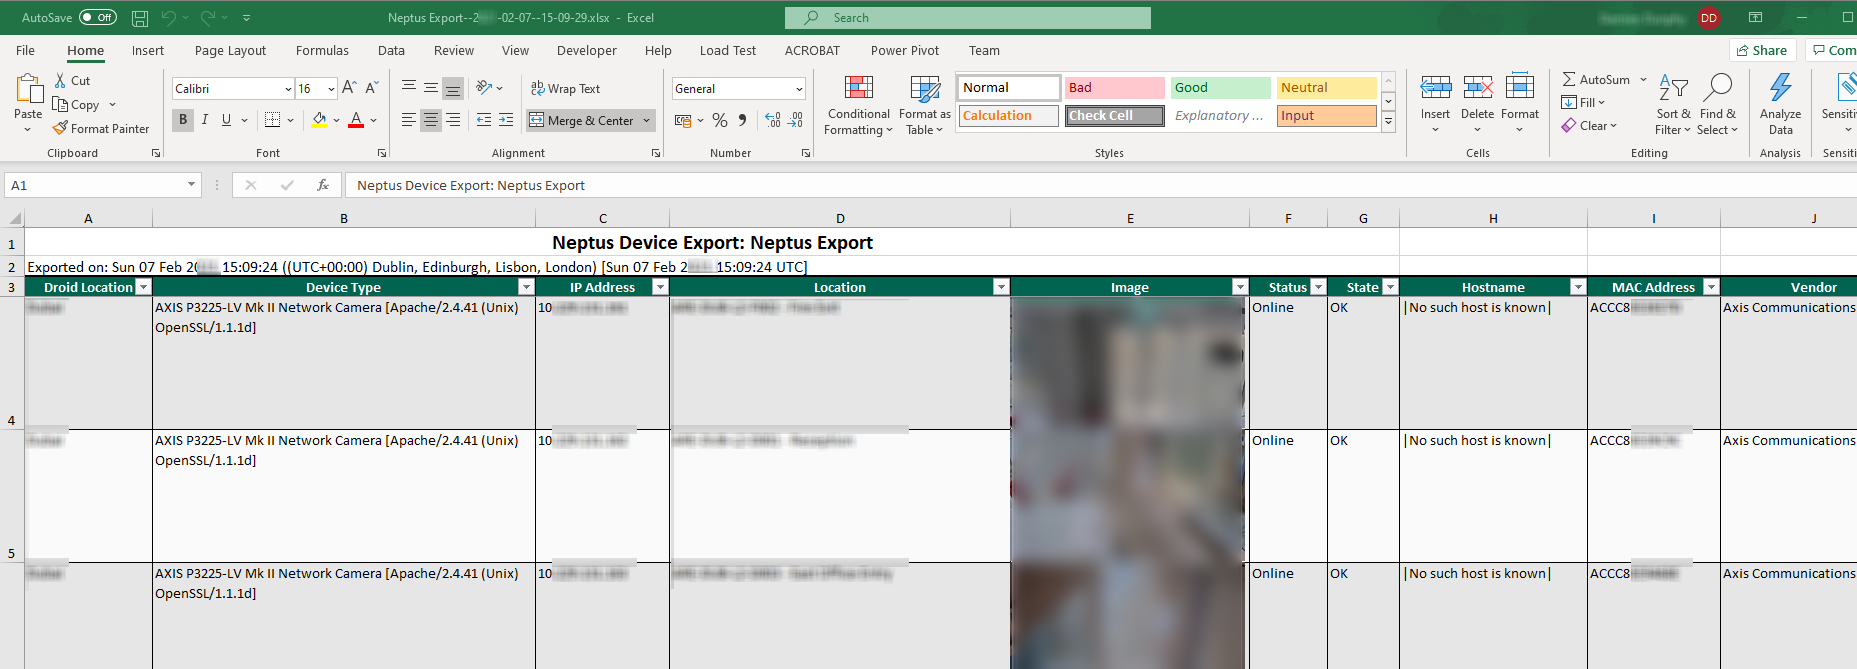 Neptus Excel Report